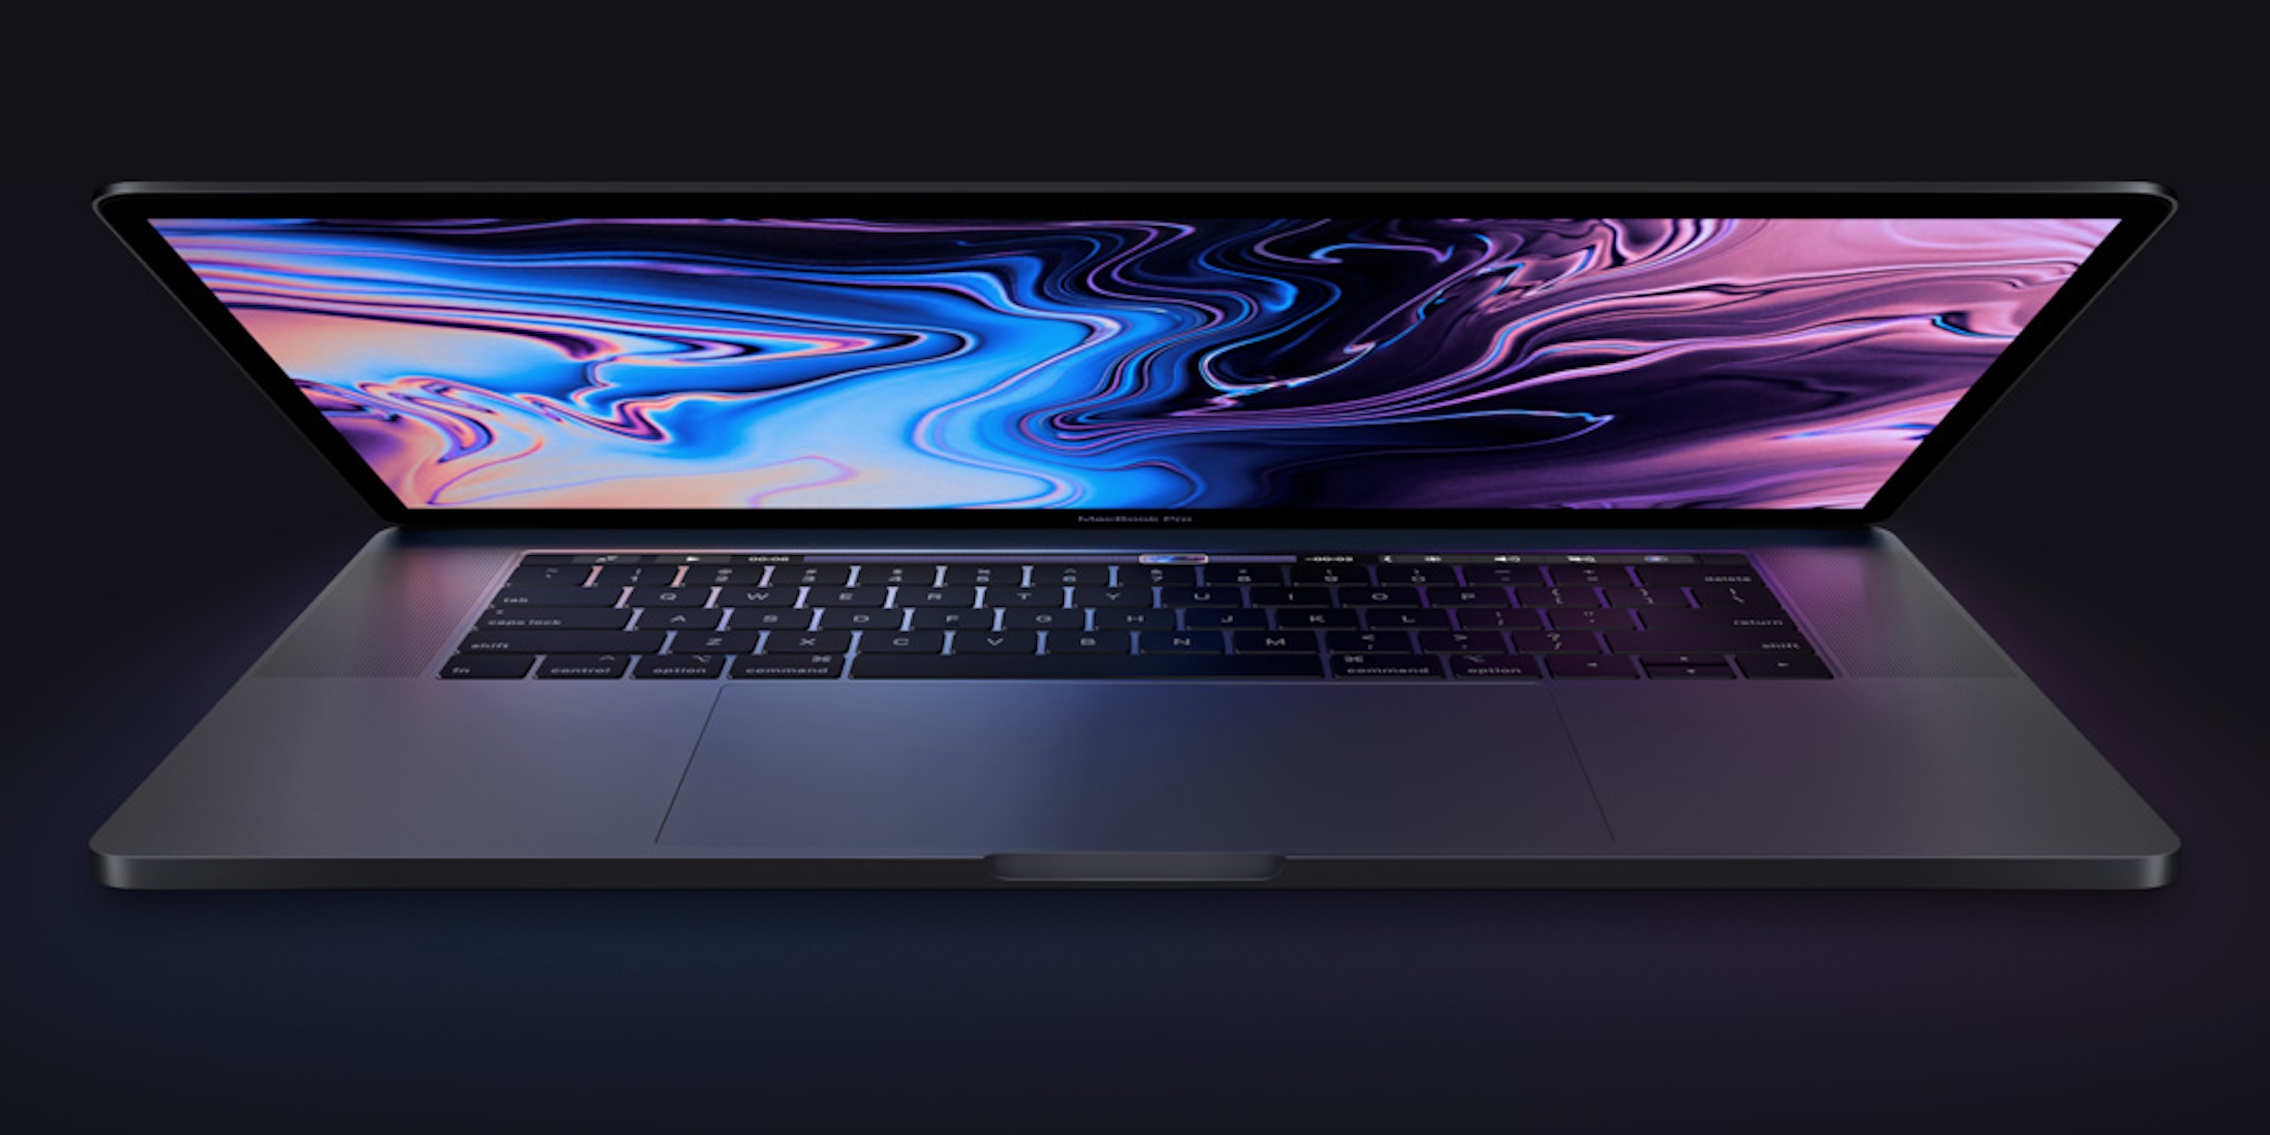 MacBook Pro 2018 display partially open